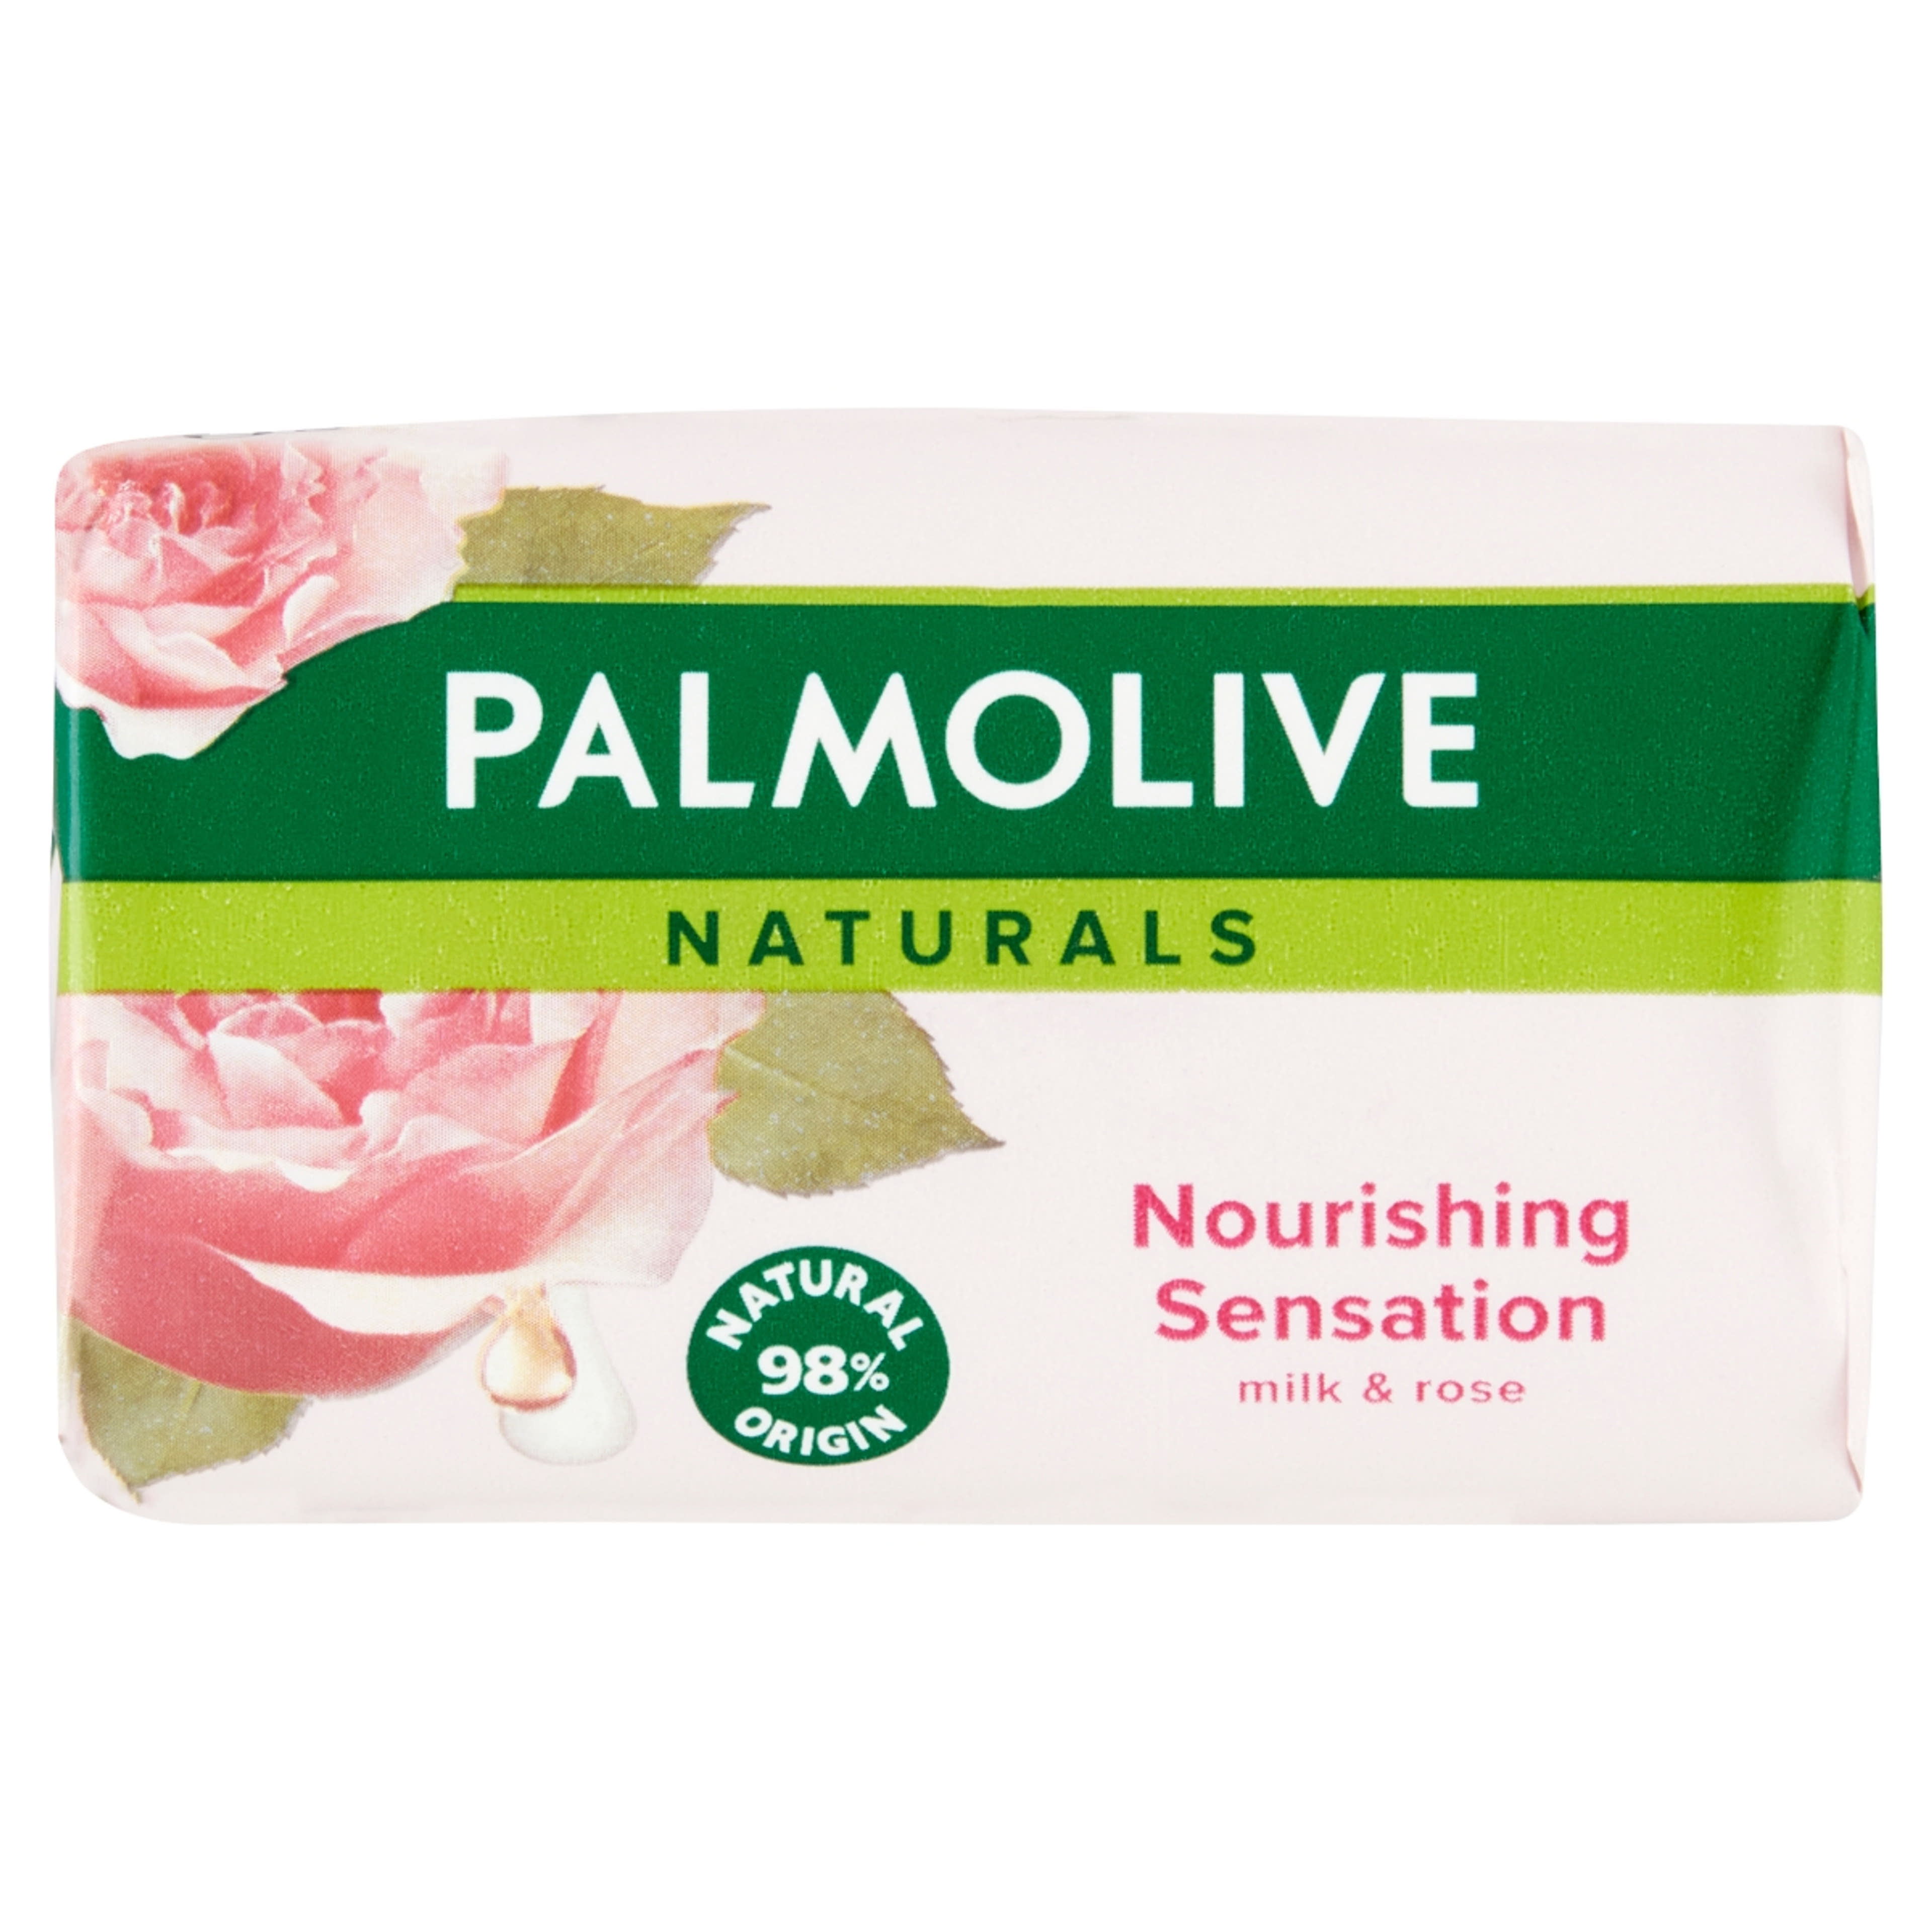 Palmolive Naturals Nourishing Sensation pipereszappan tej- és rózsaszirom-kivonattal - 90 g-1